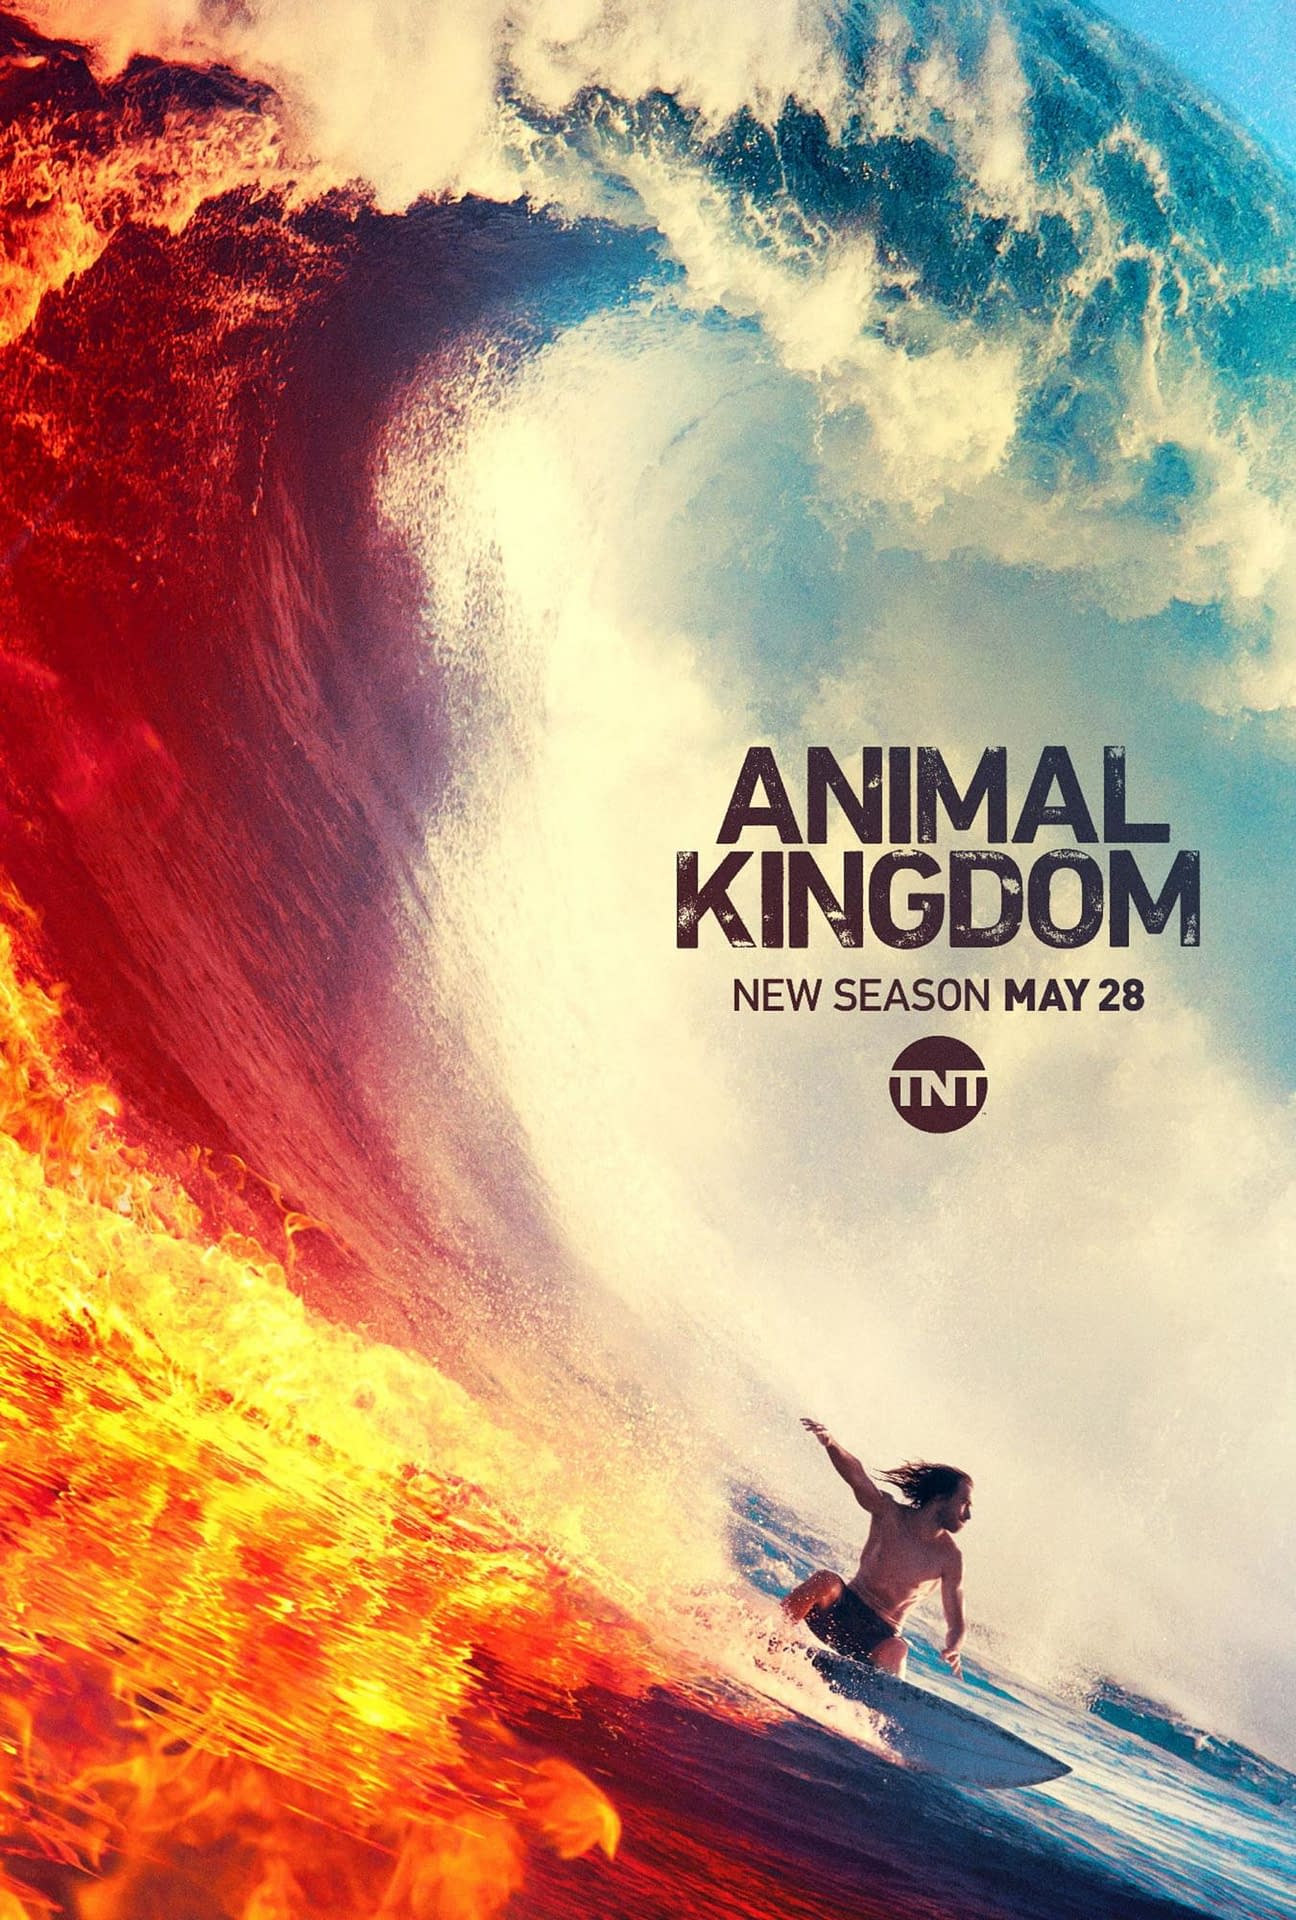 Animal Kingdom season 4 trailer and release date